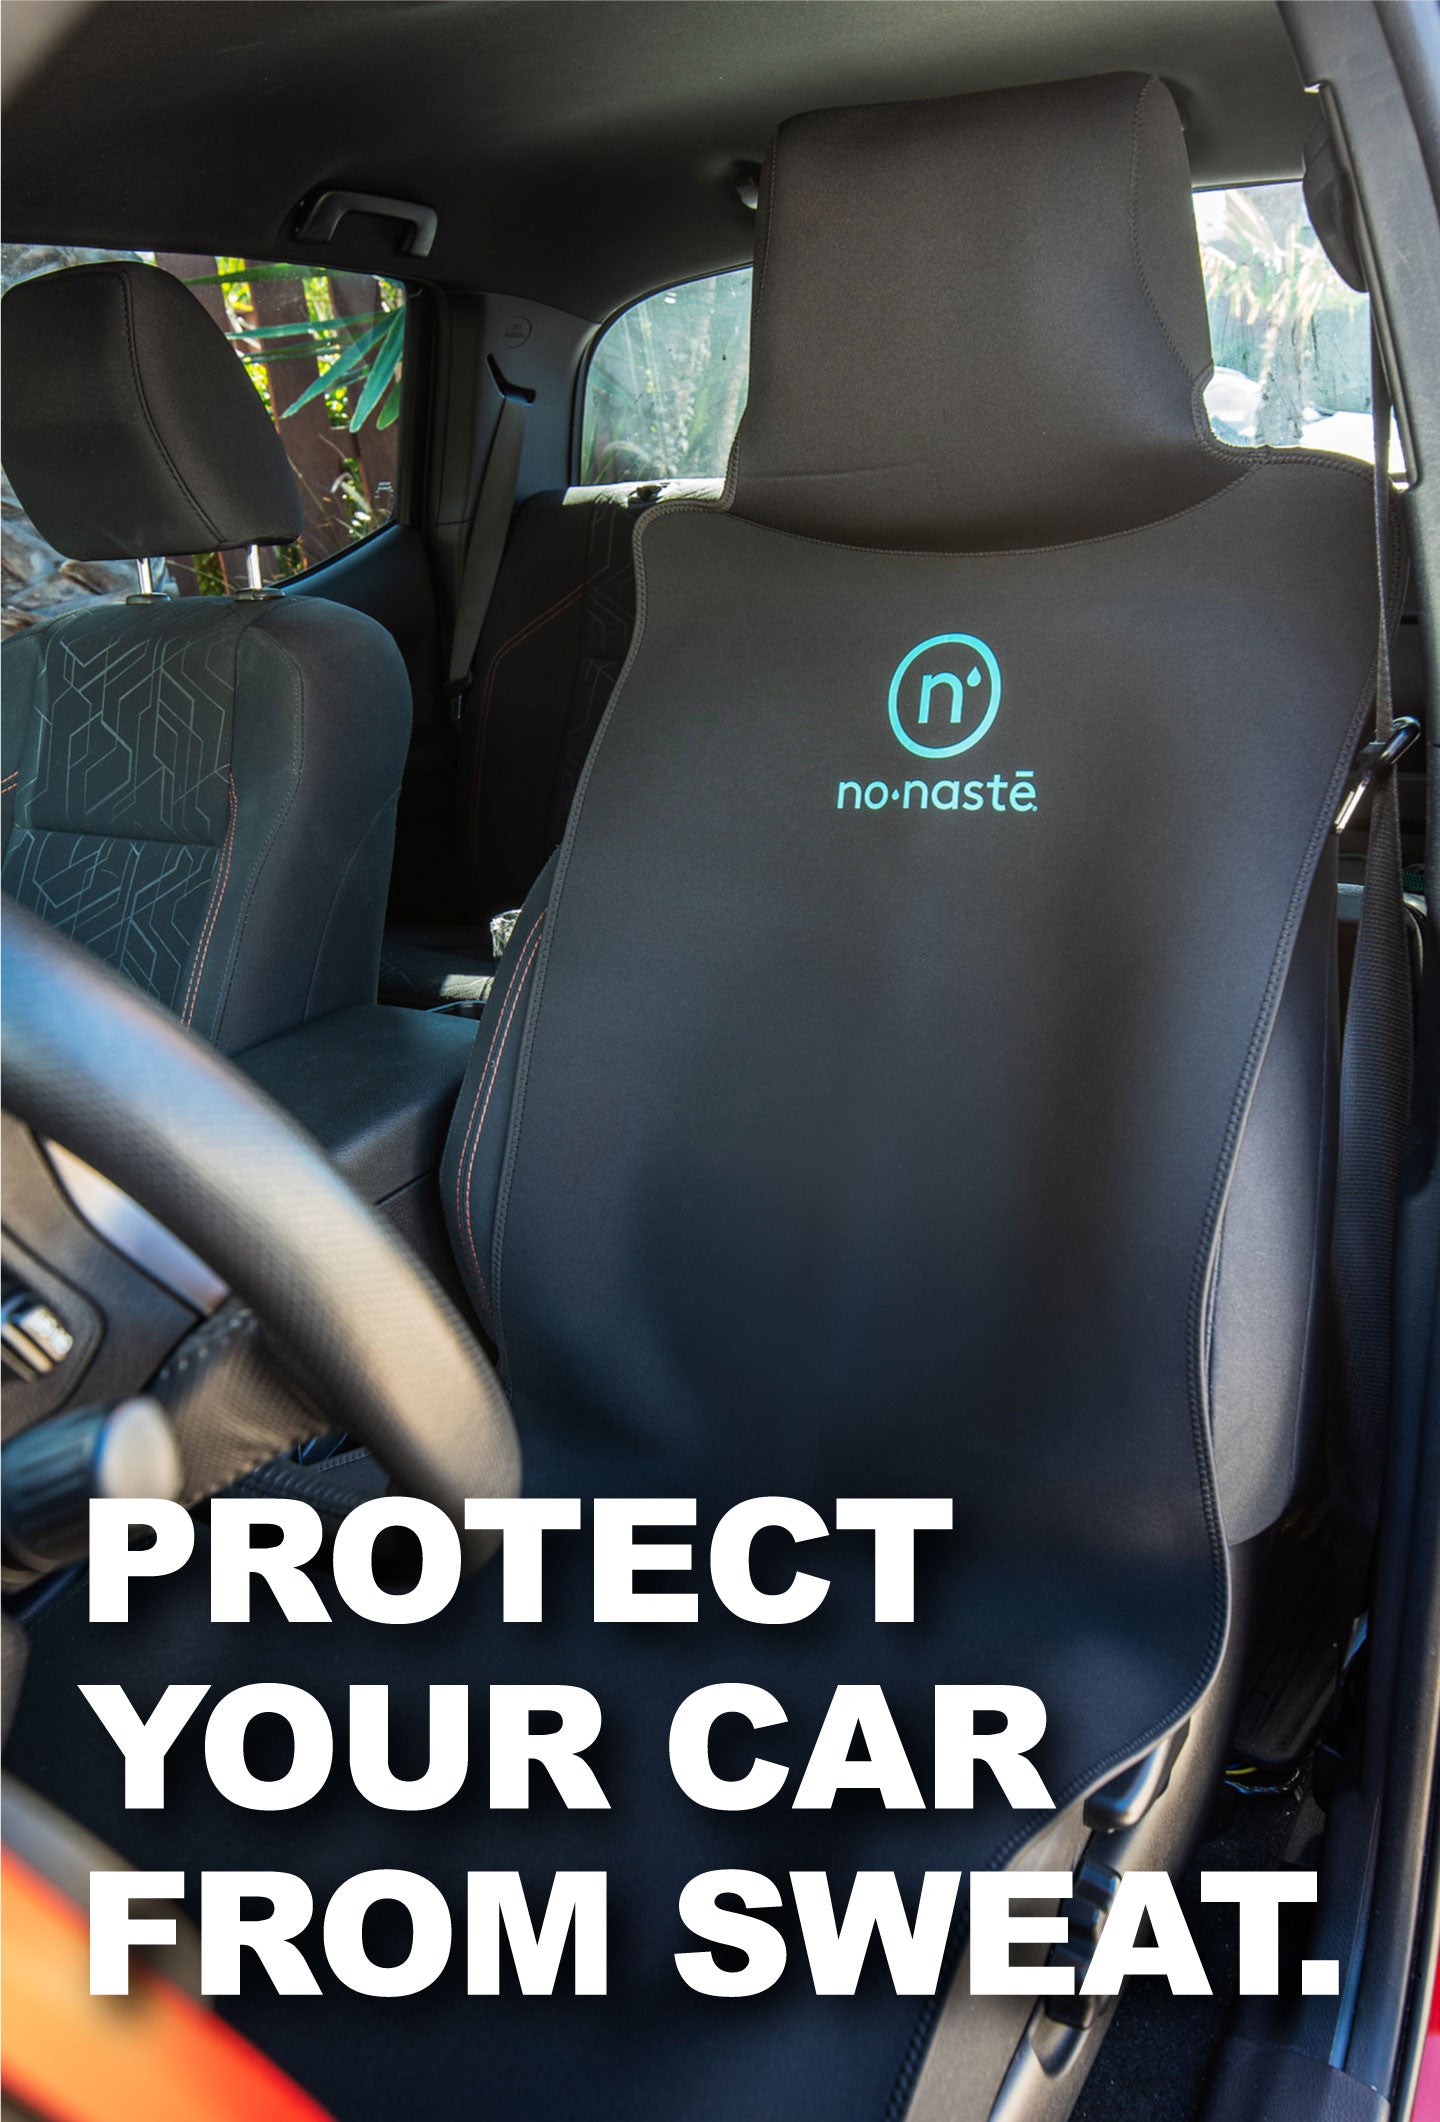 Premium Car Seat Protector